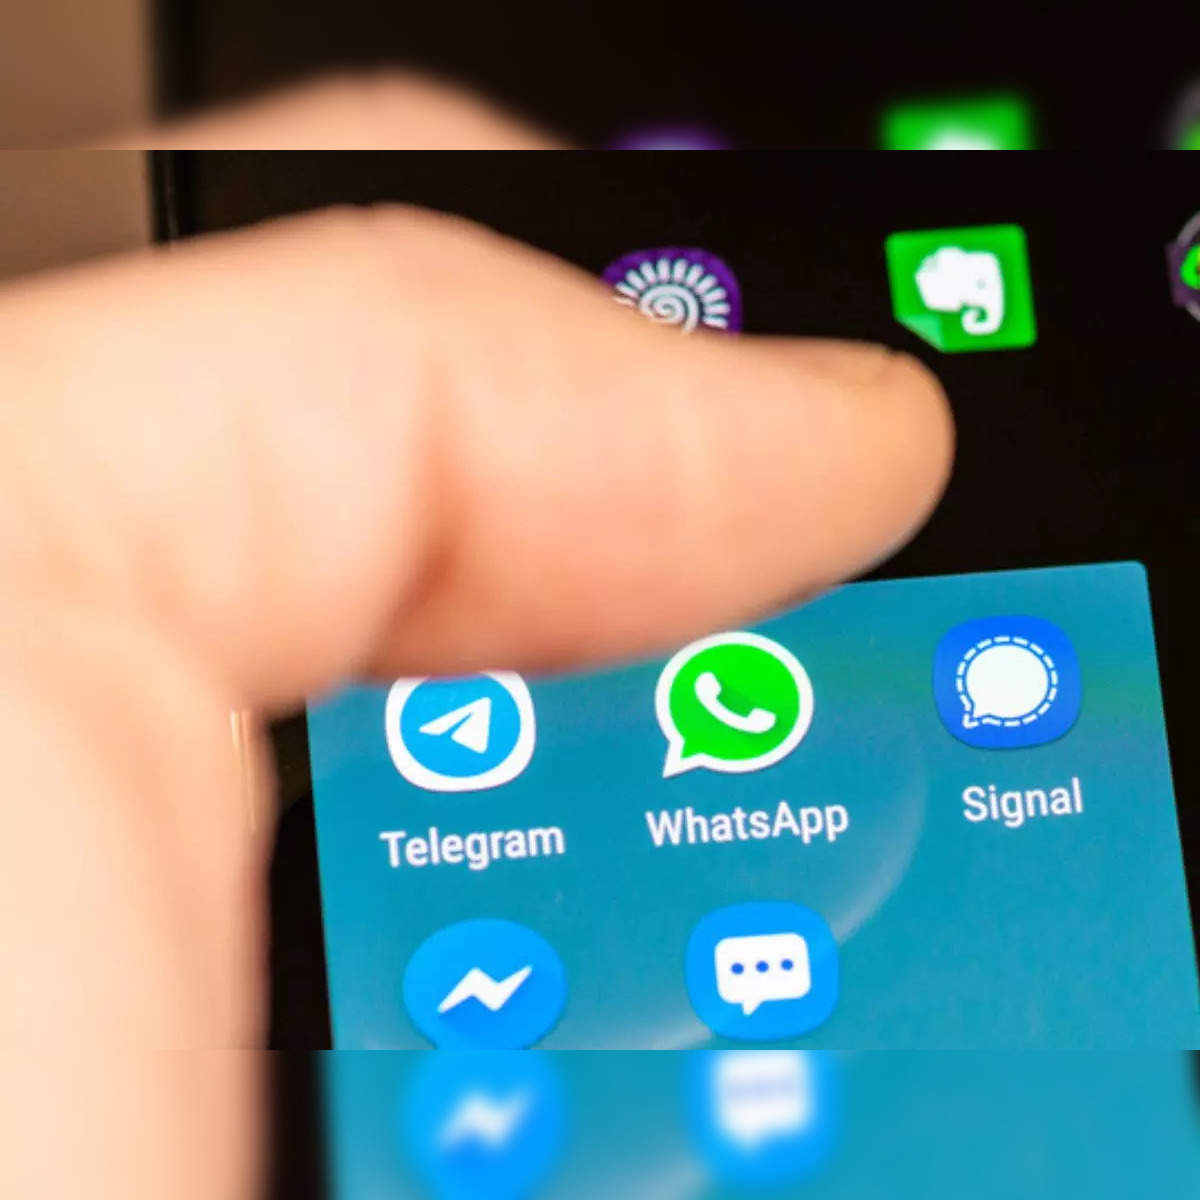 whatsapp news: WhatsApp, Telegram, iMessage & Signal: All the